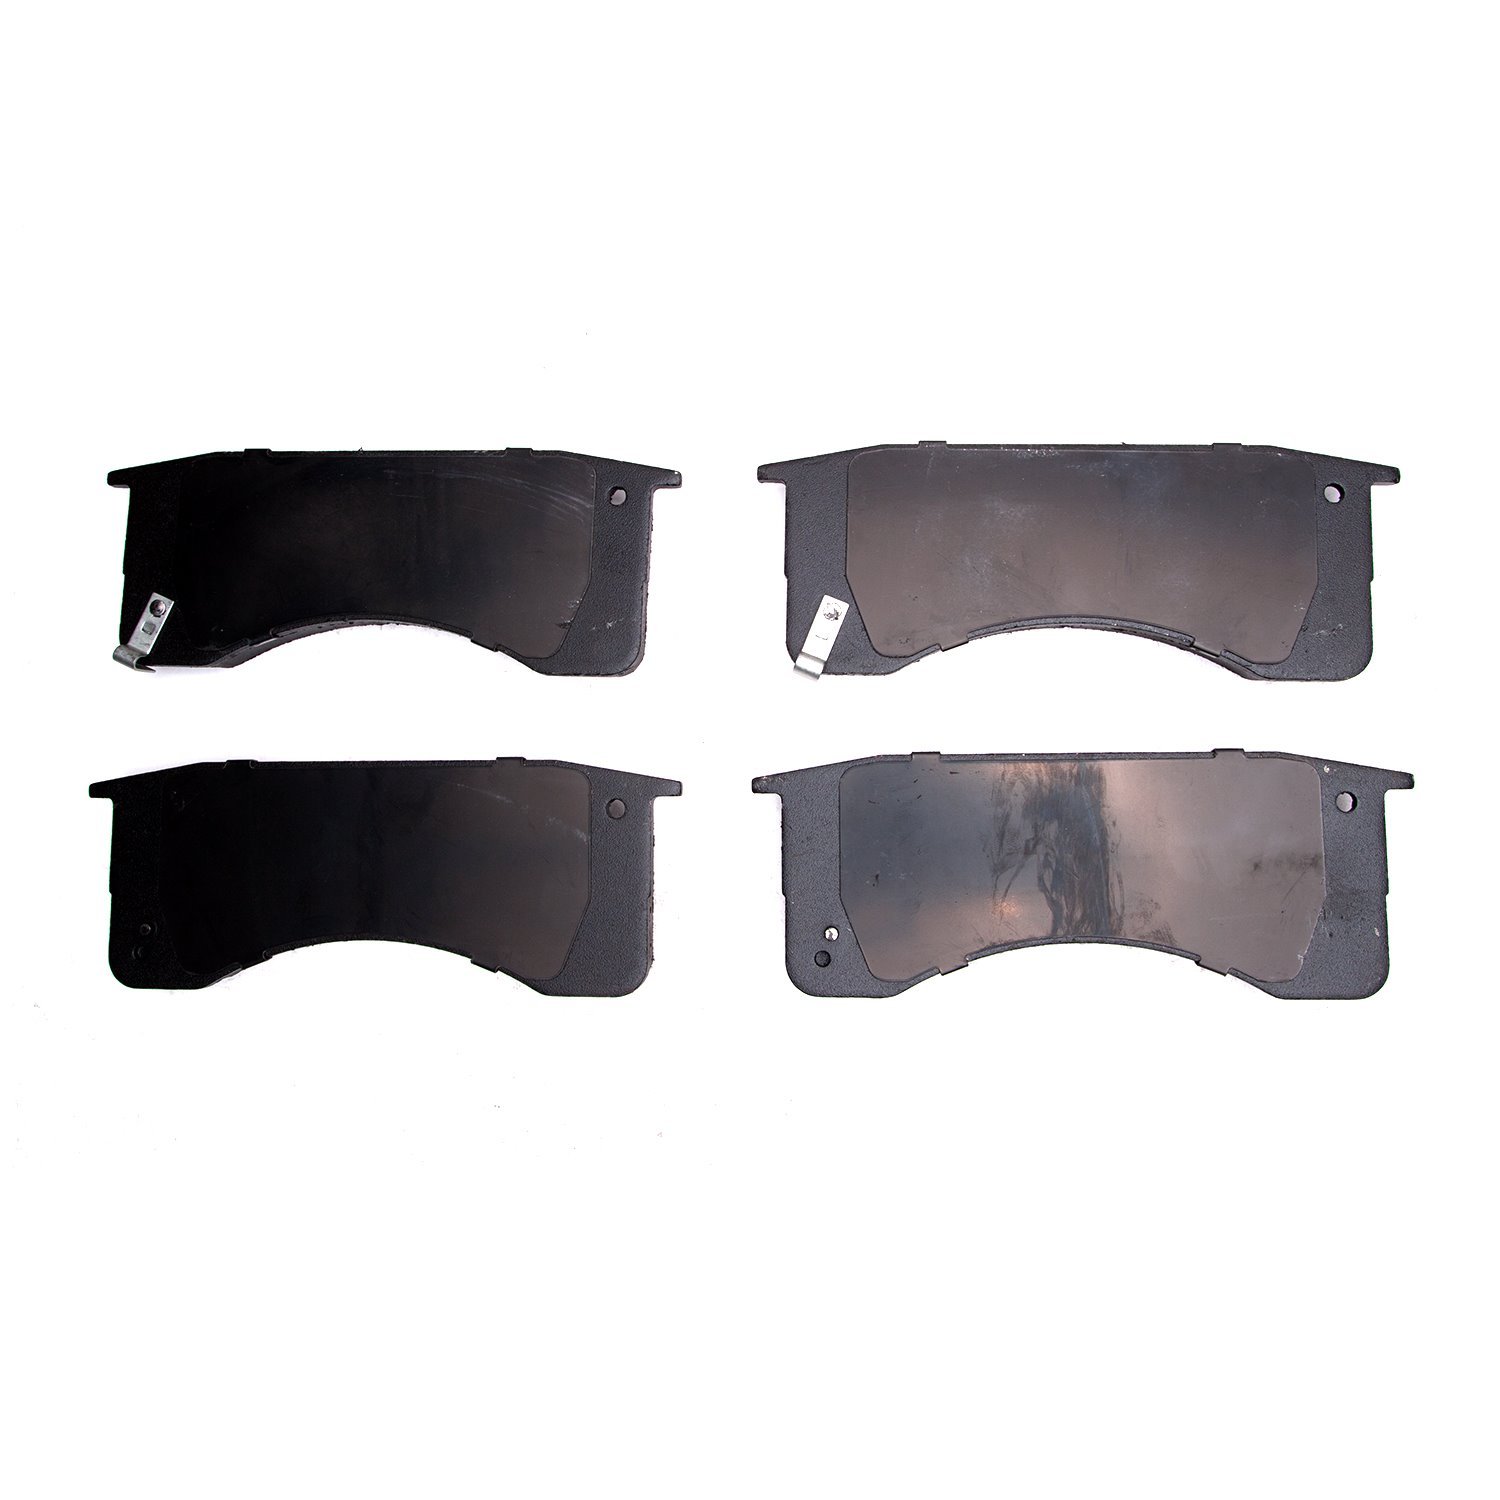 1214-0769-00 Heavy-Duty Semi-Metallic Brake Pads, Fits Select Multiple Makes/Models, Position: Rear,Front,Fr,Fr & Rr,Rr